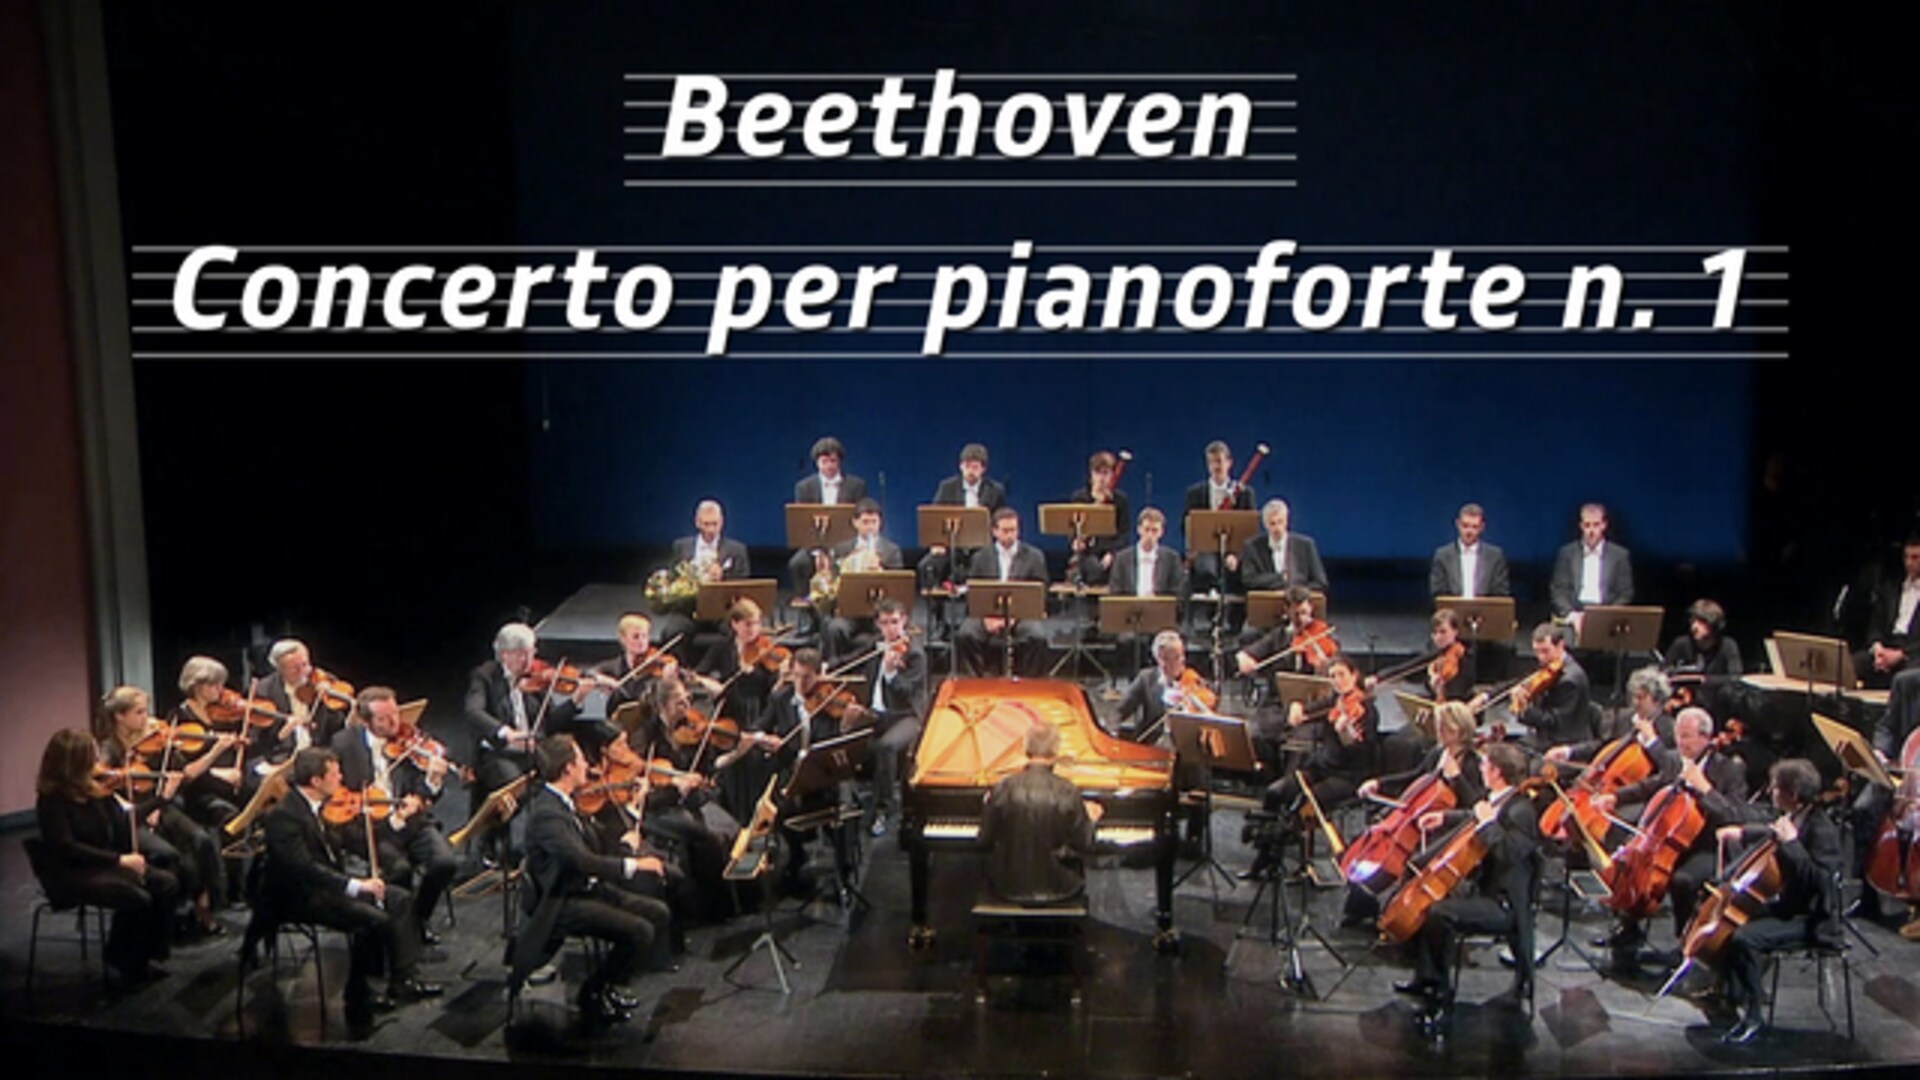 Beethoven - Concerto per pianoforte n. 1